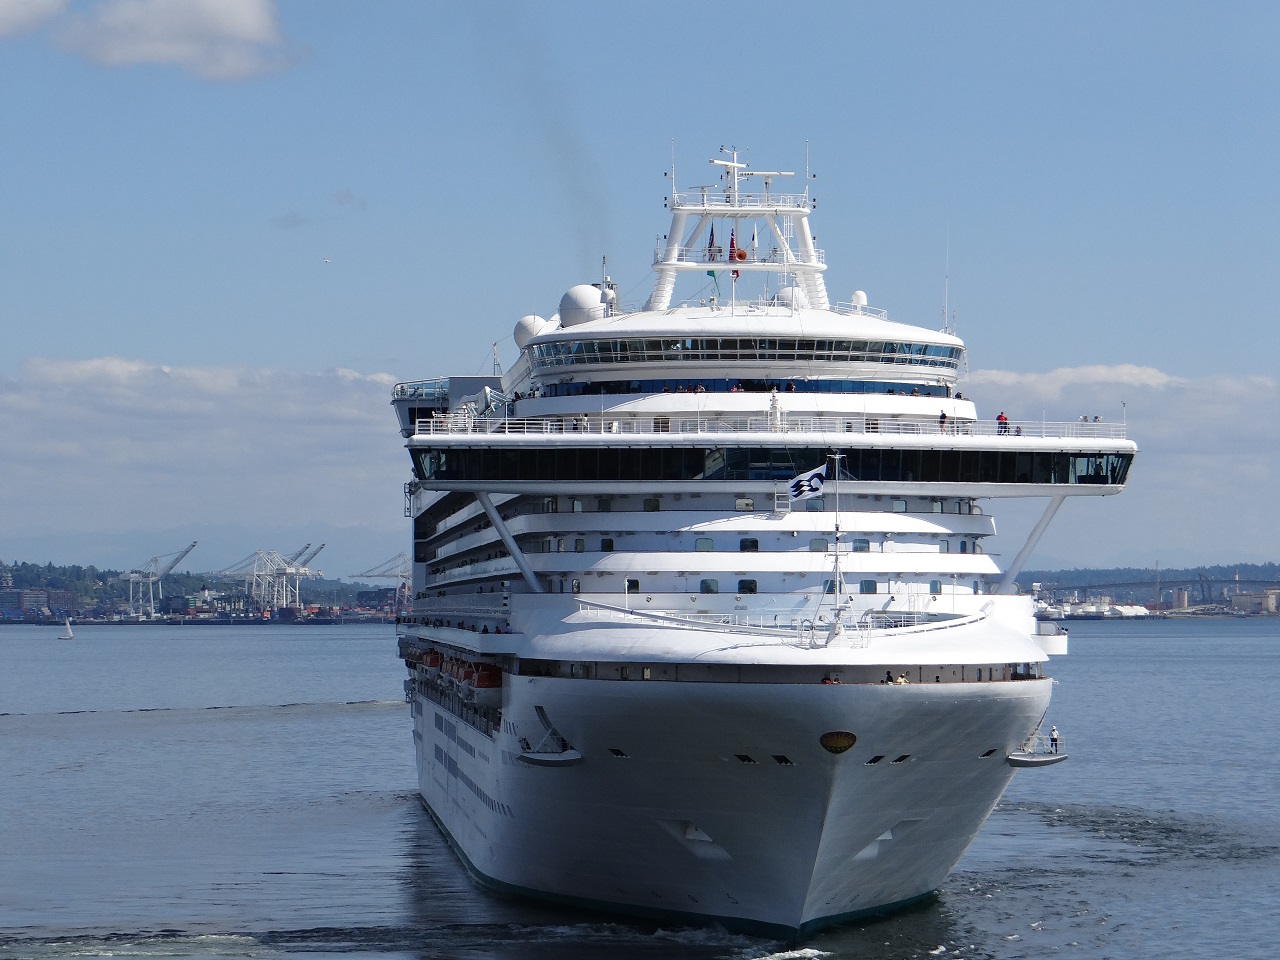 Seattle Cruise to Alaska Princess Cruise